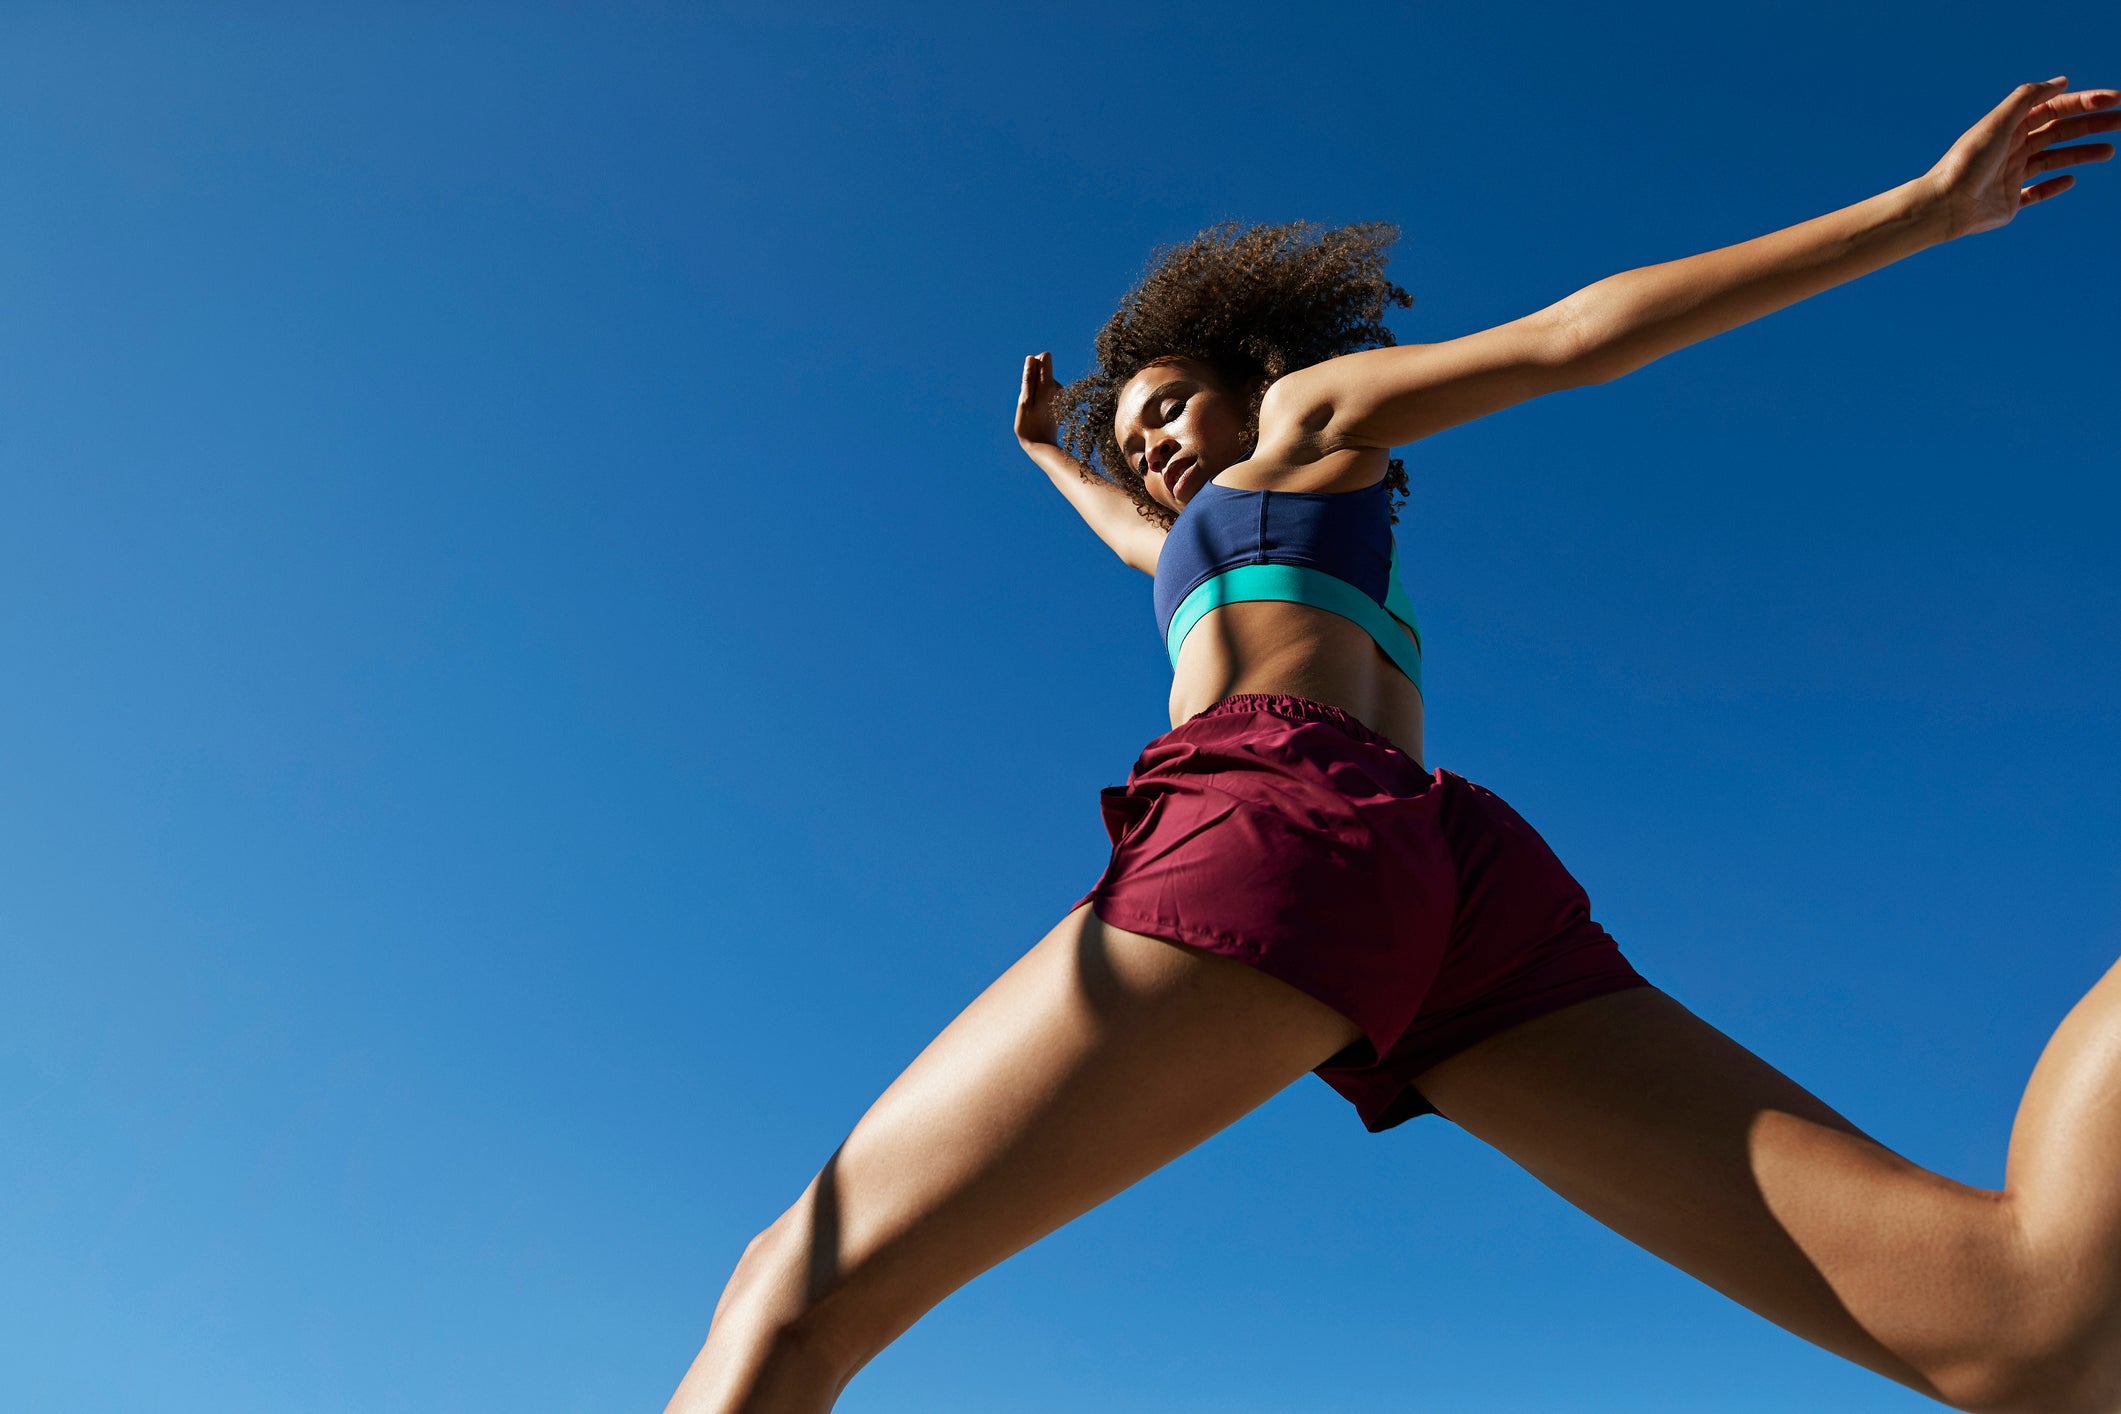 Classic 2.0 Aero Tech Designs Women's Yoga Compression Running Fitness Shorts 